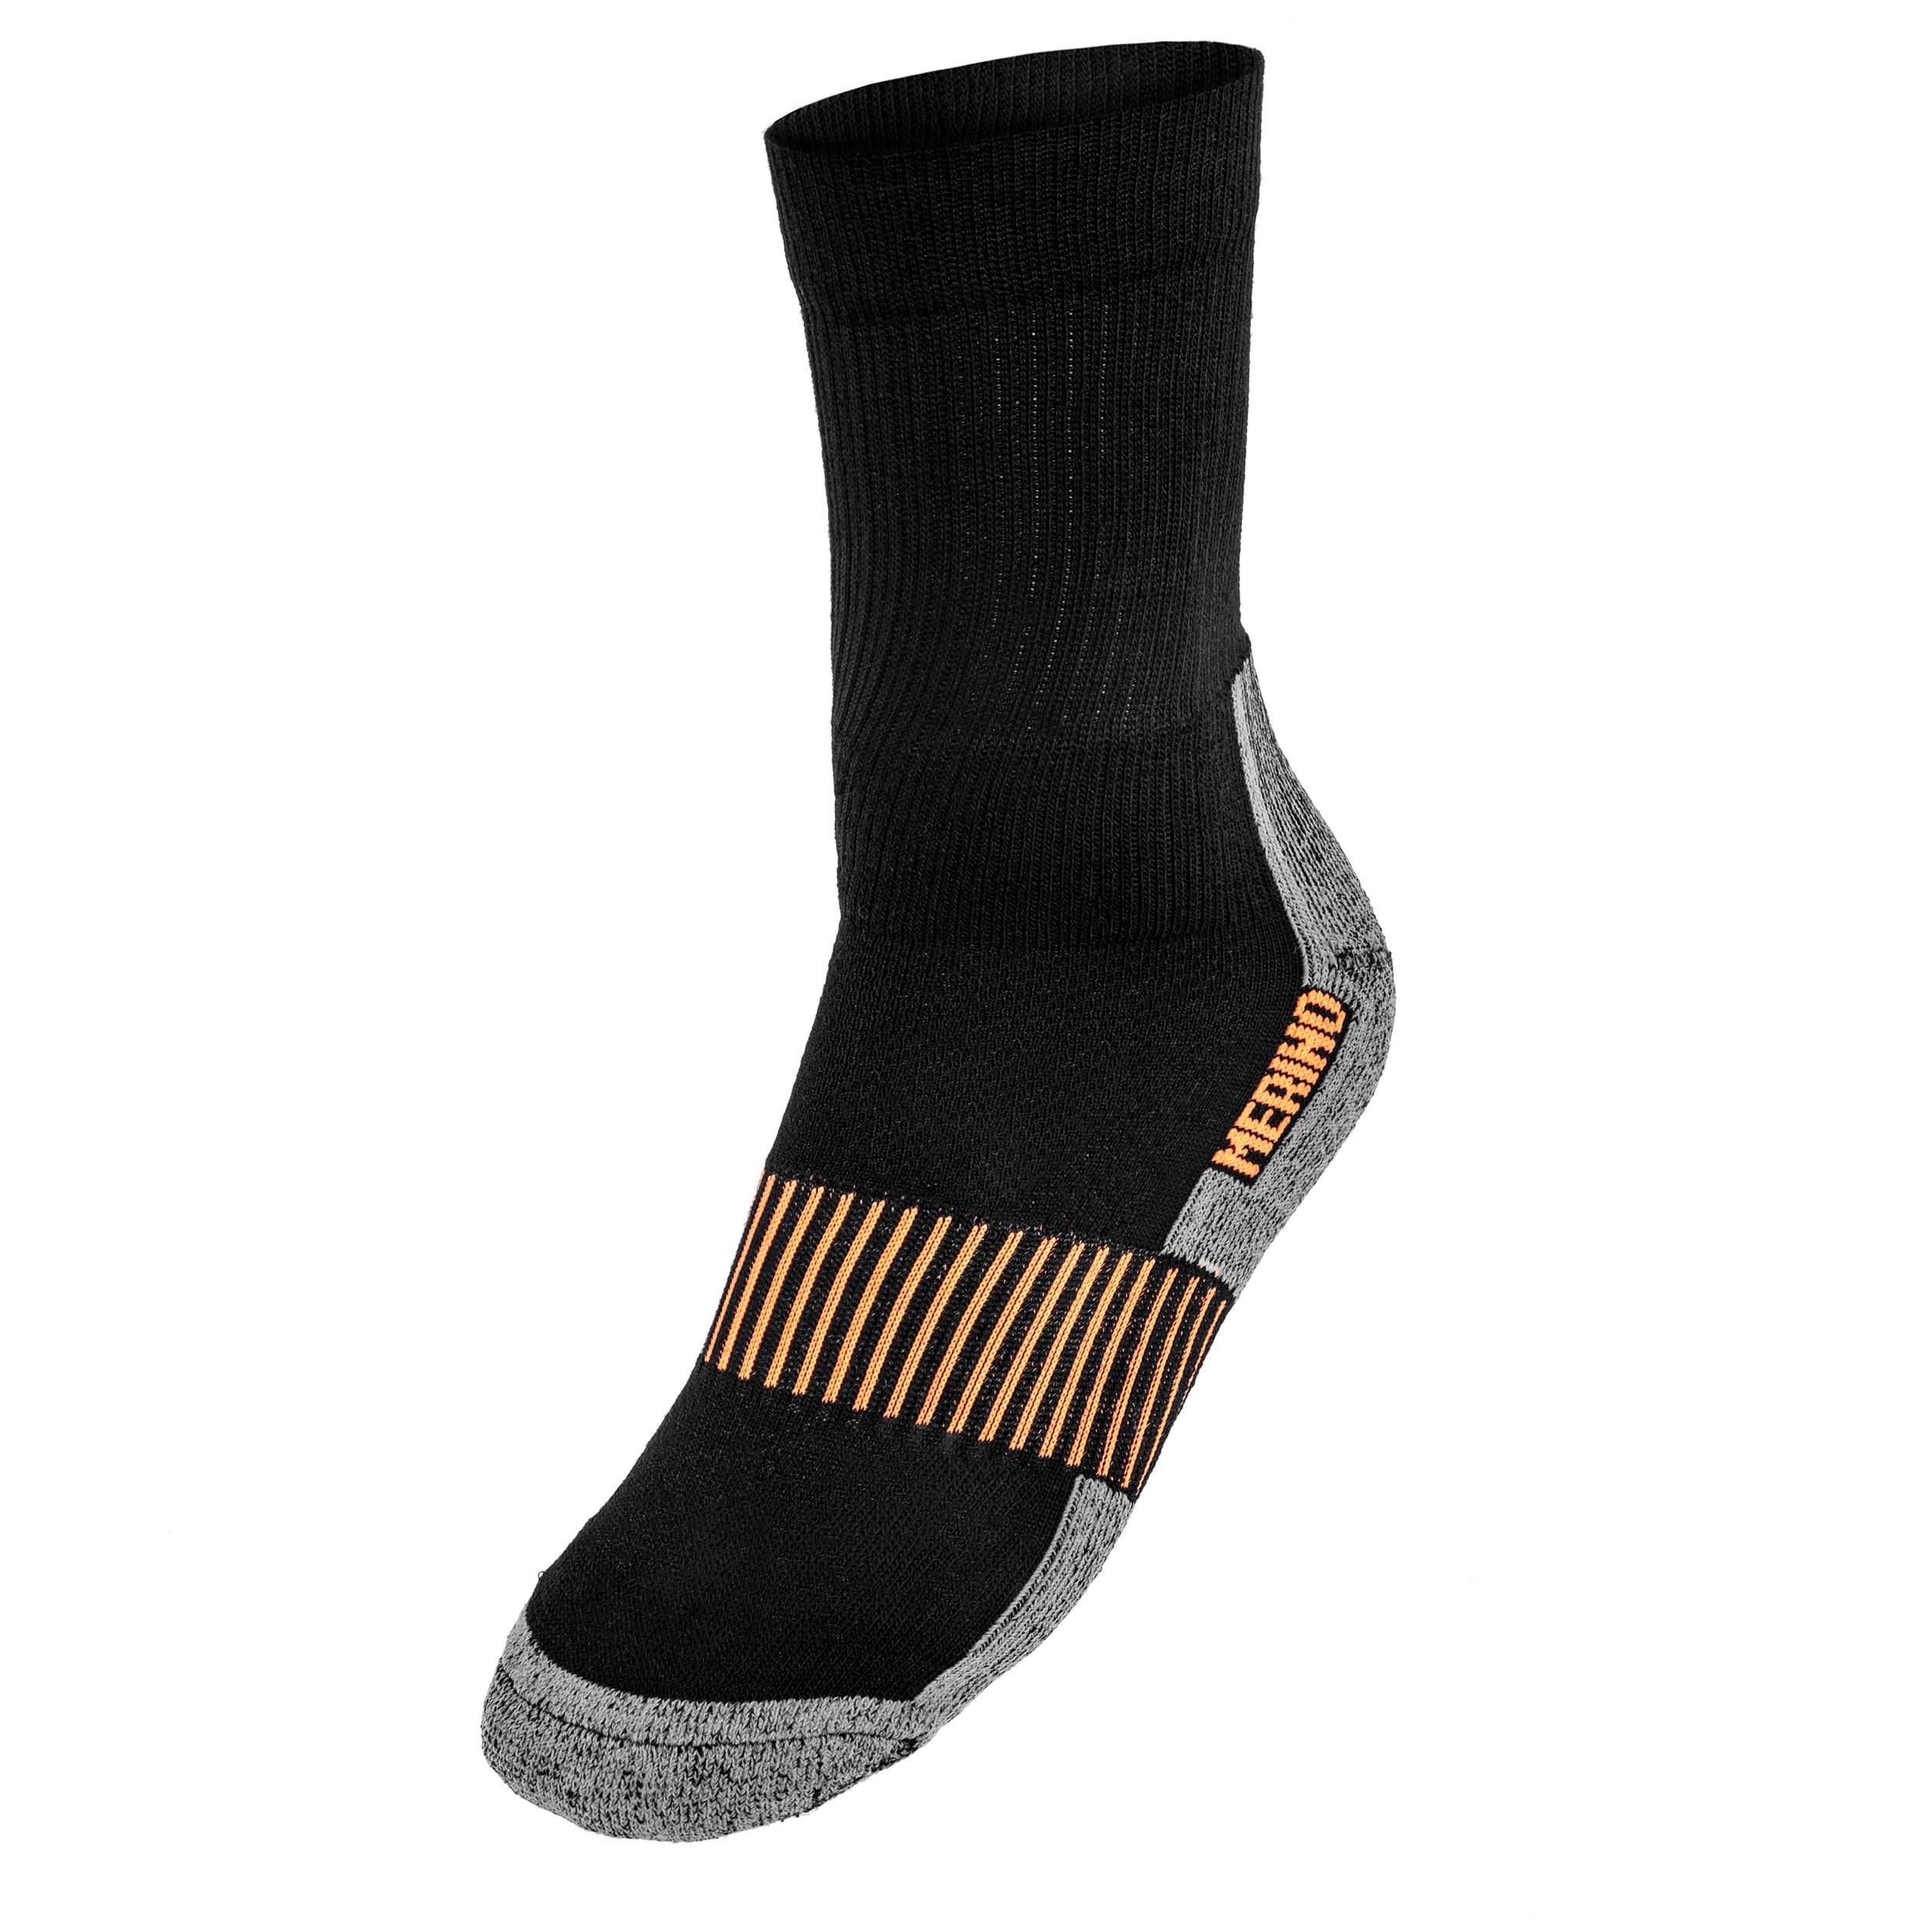 Шкарпетки Bennon Trek Merino - Black